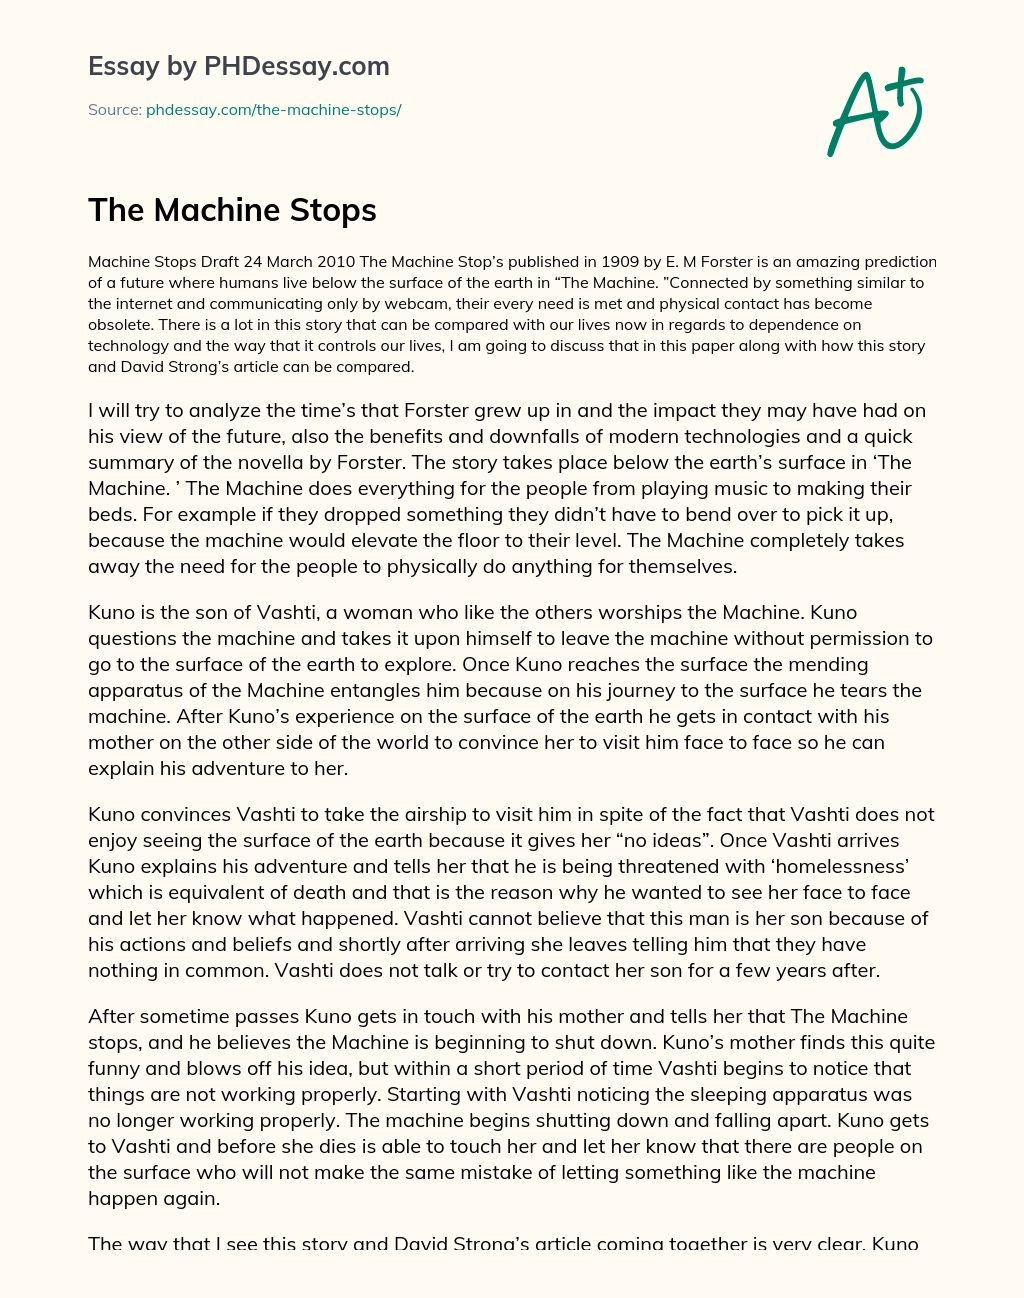 The Machine Stops essay